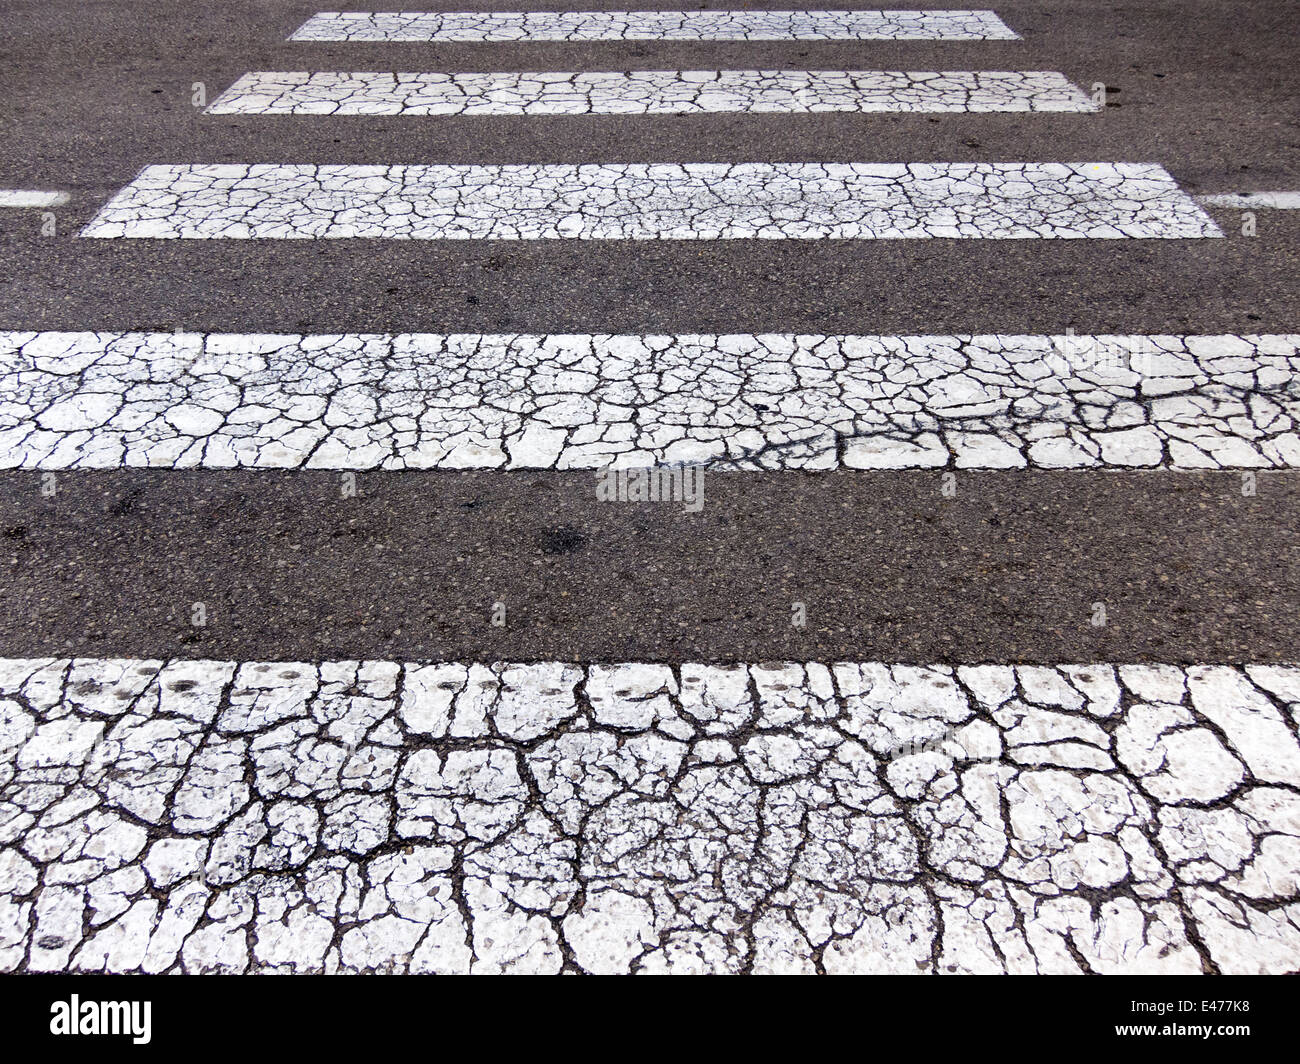 Grunge pedestrian zebra crossing detail Stock Photo